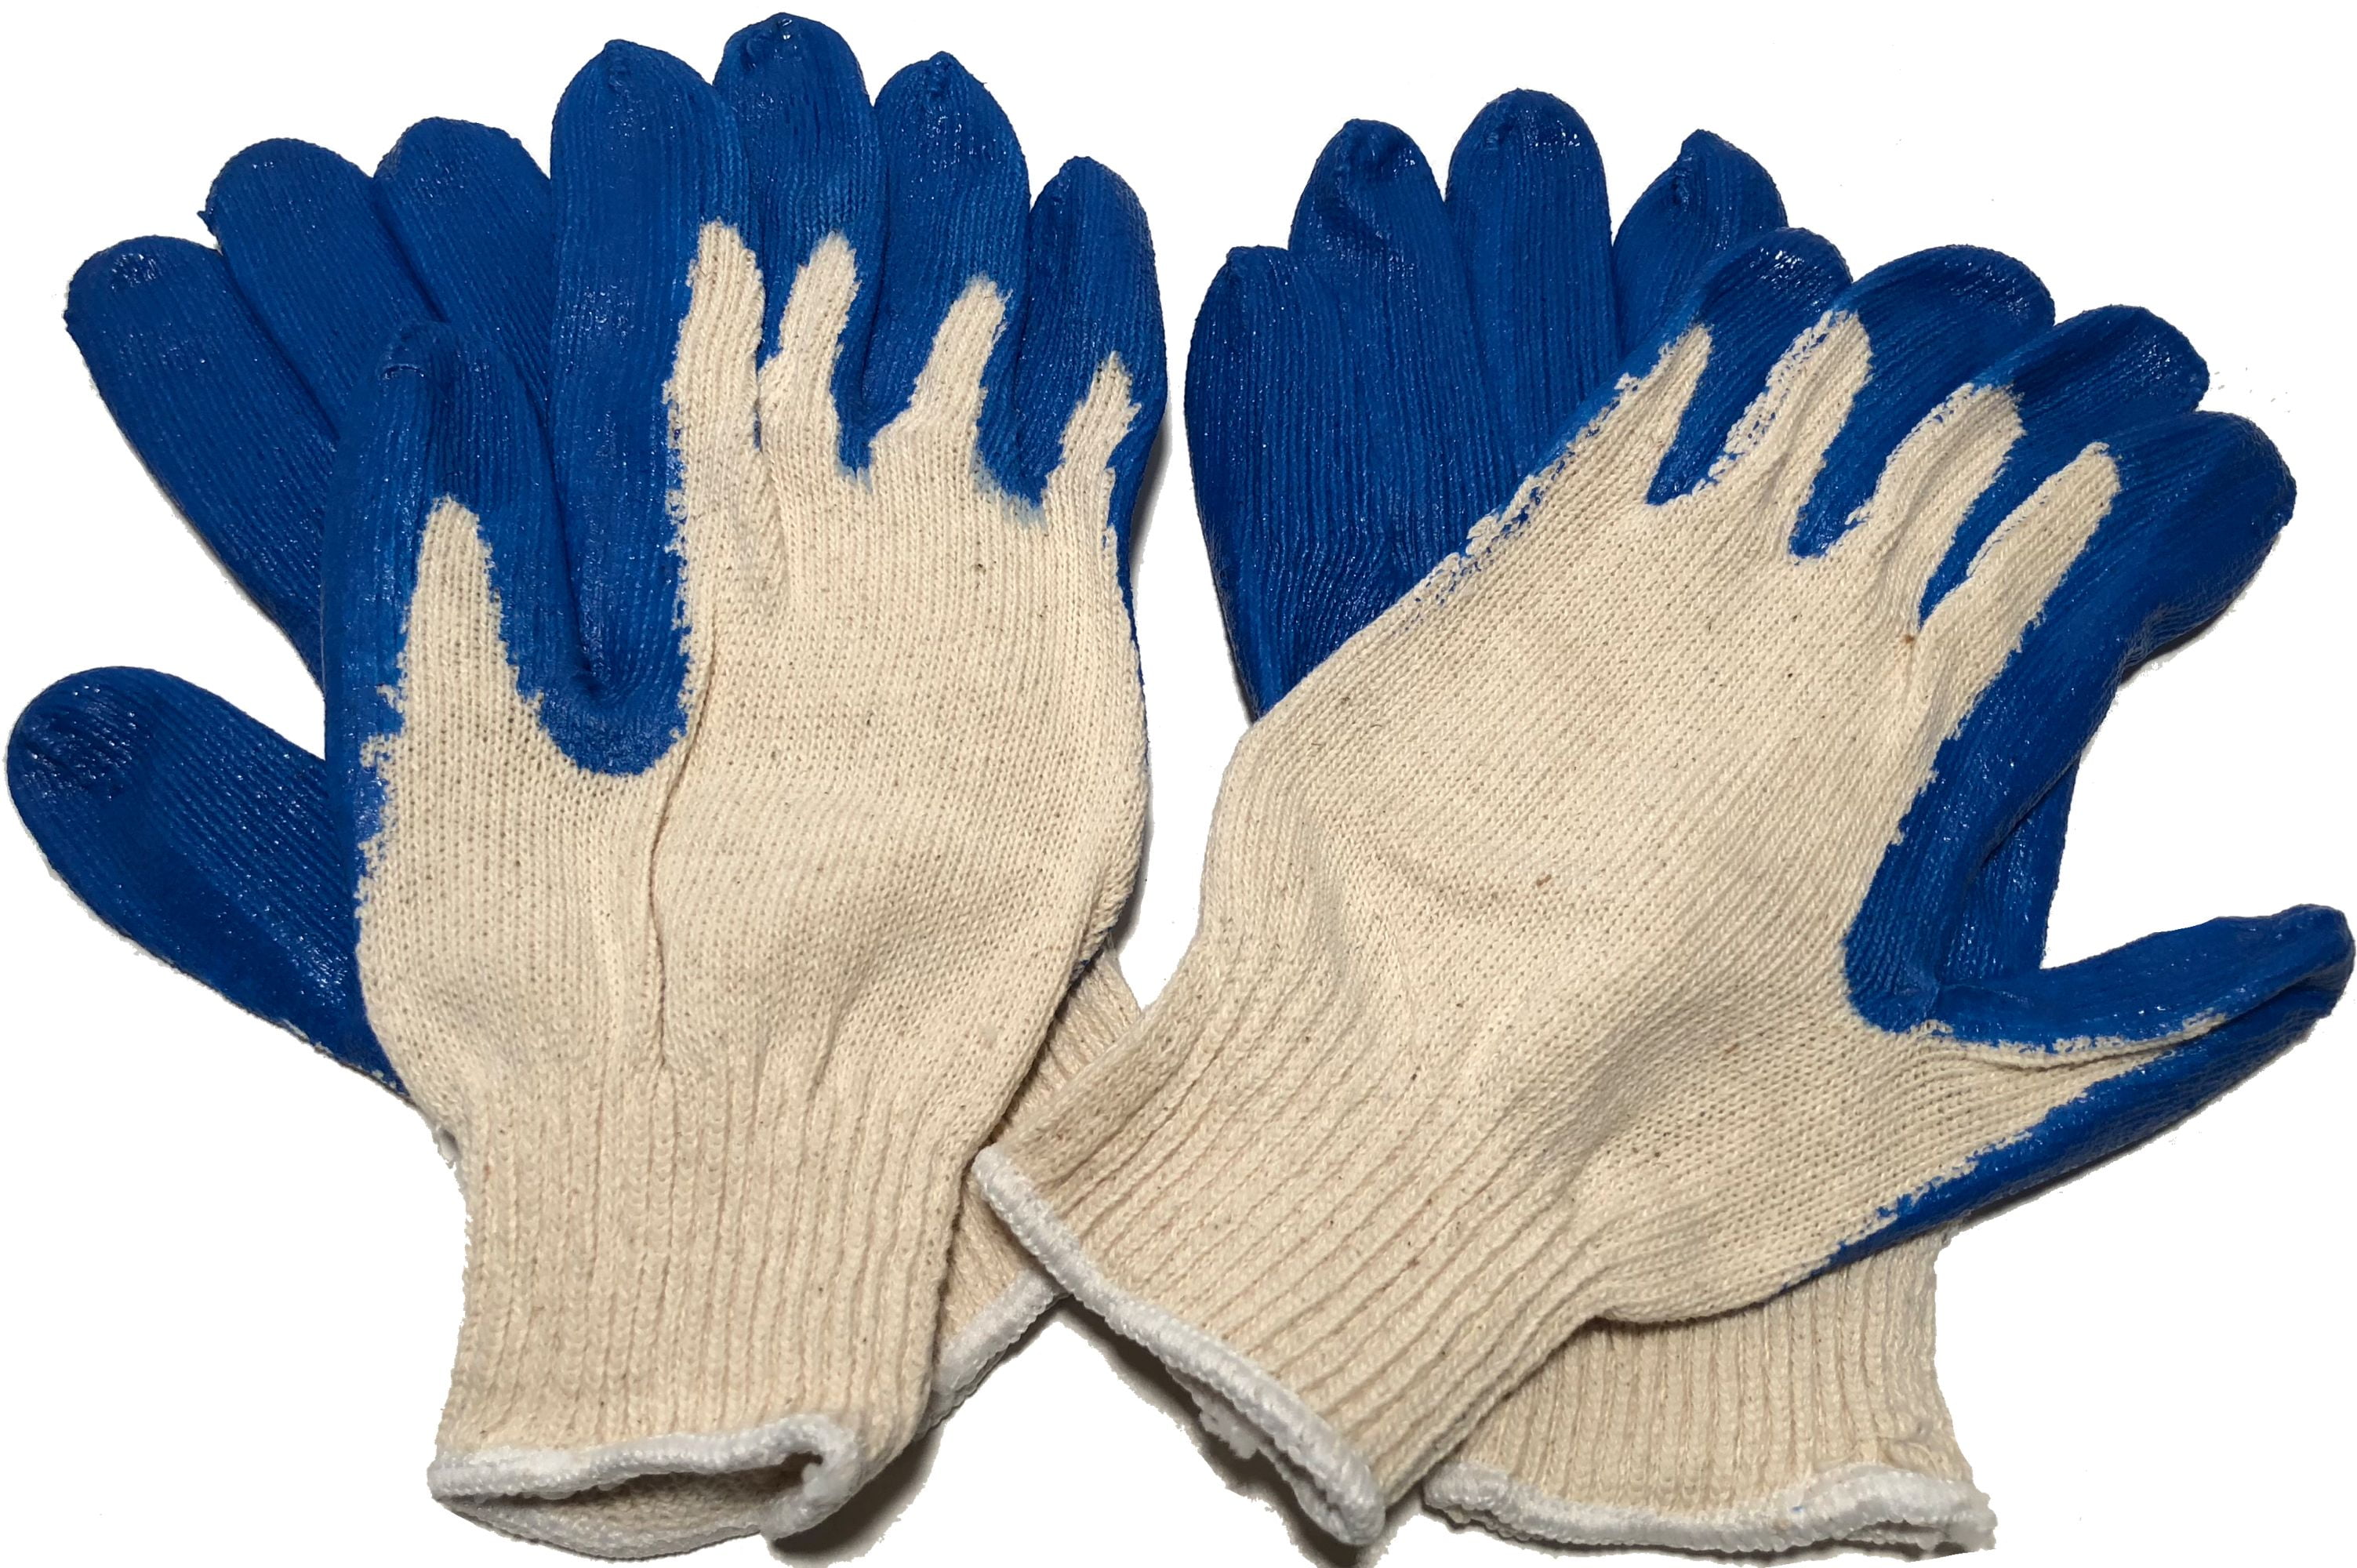 Fons & Porter Grip Quilting Gloves, Gloves Cotton